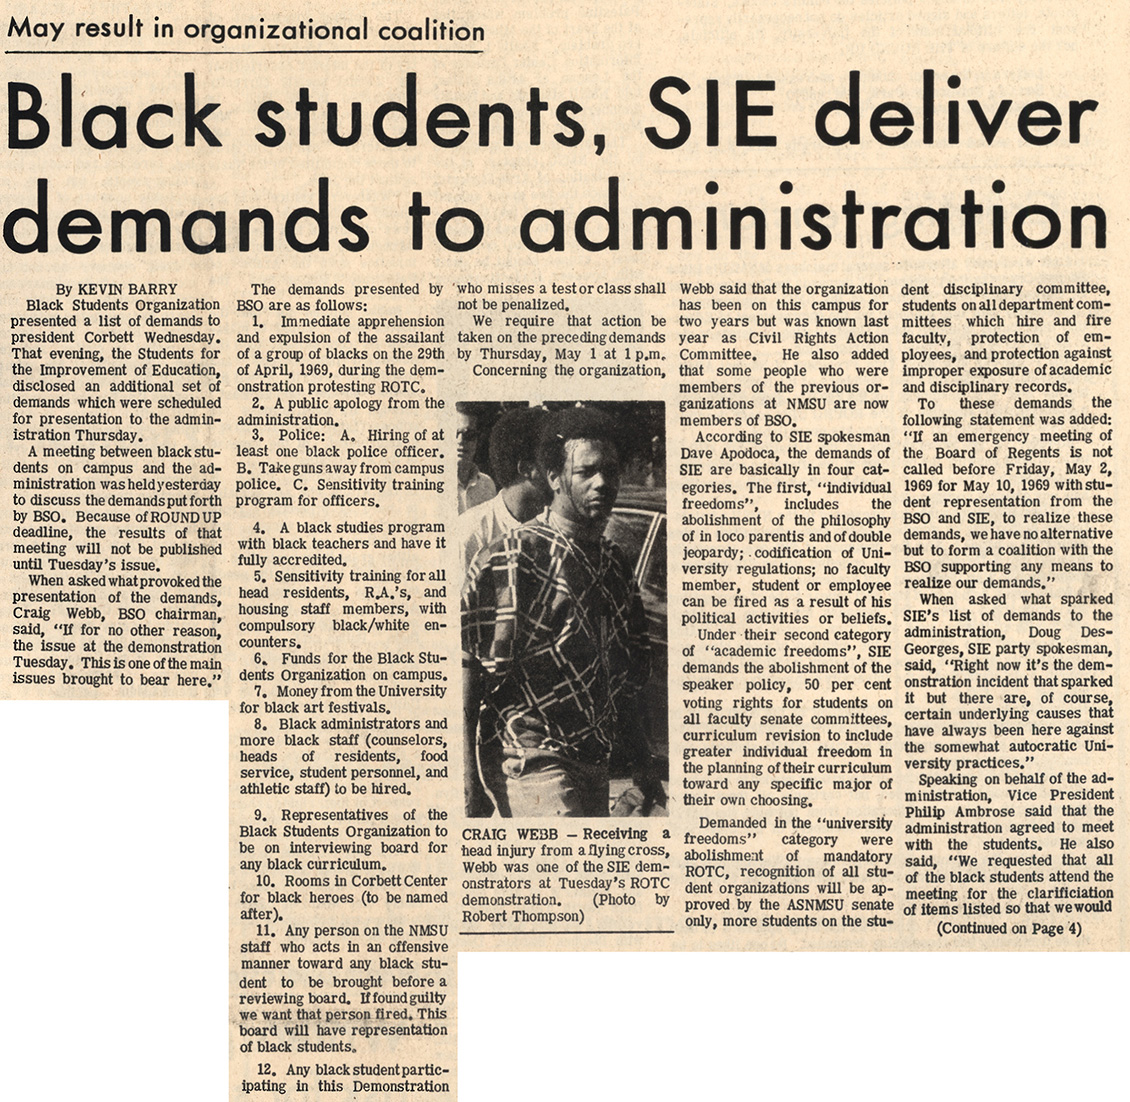 newspaper article titled Black students, SIE deliver demands to administration